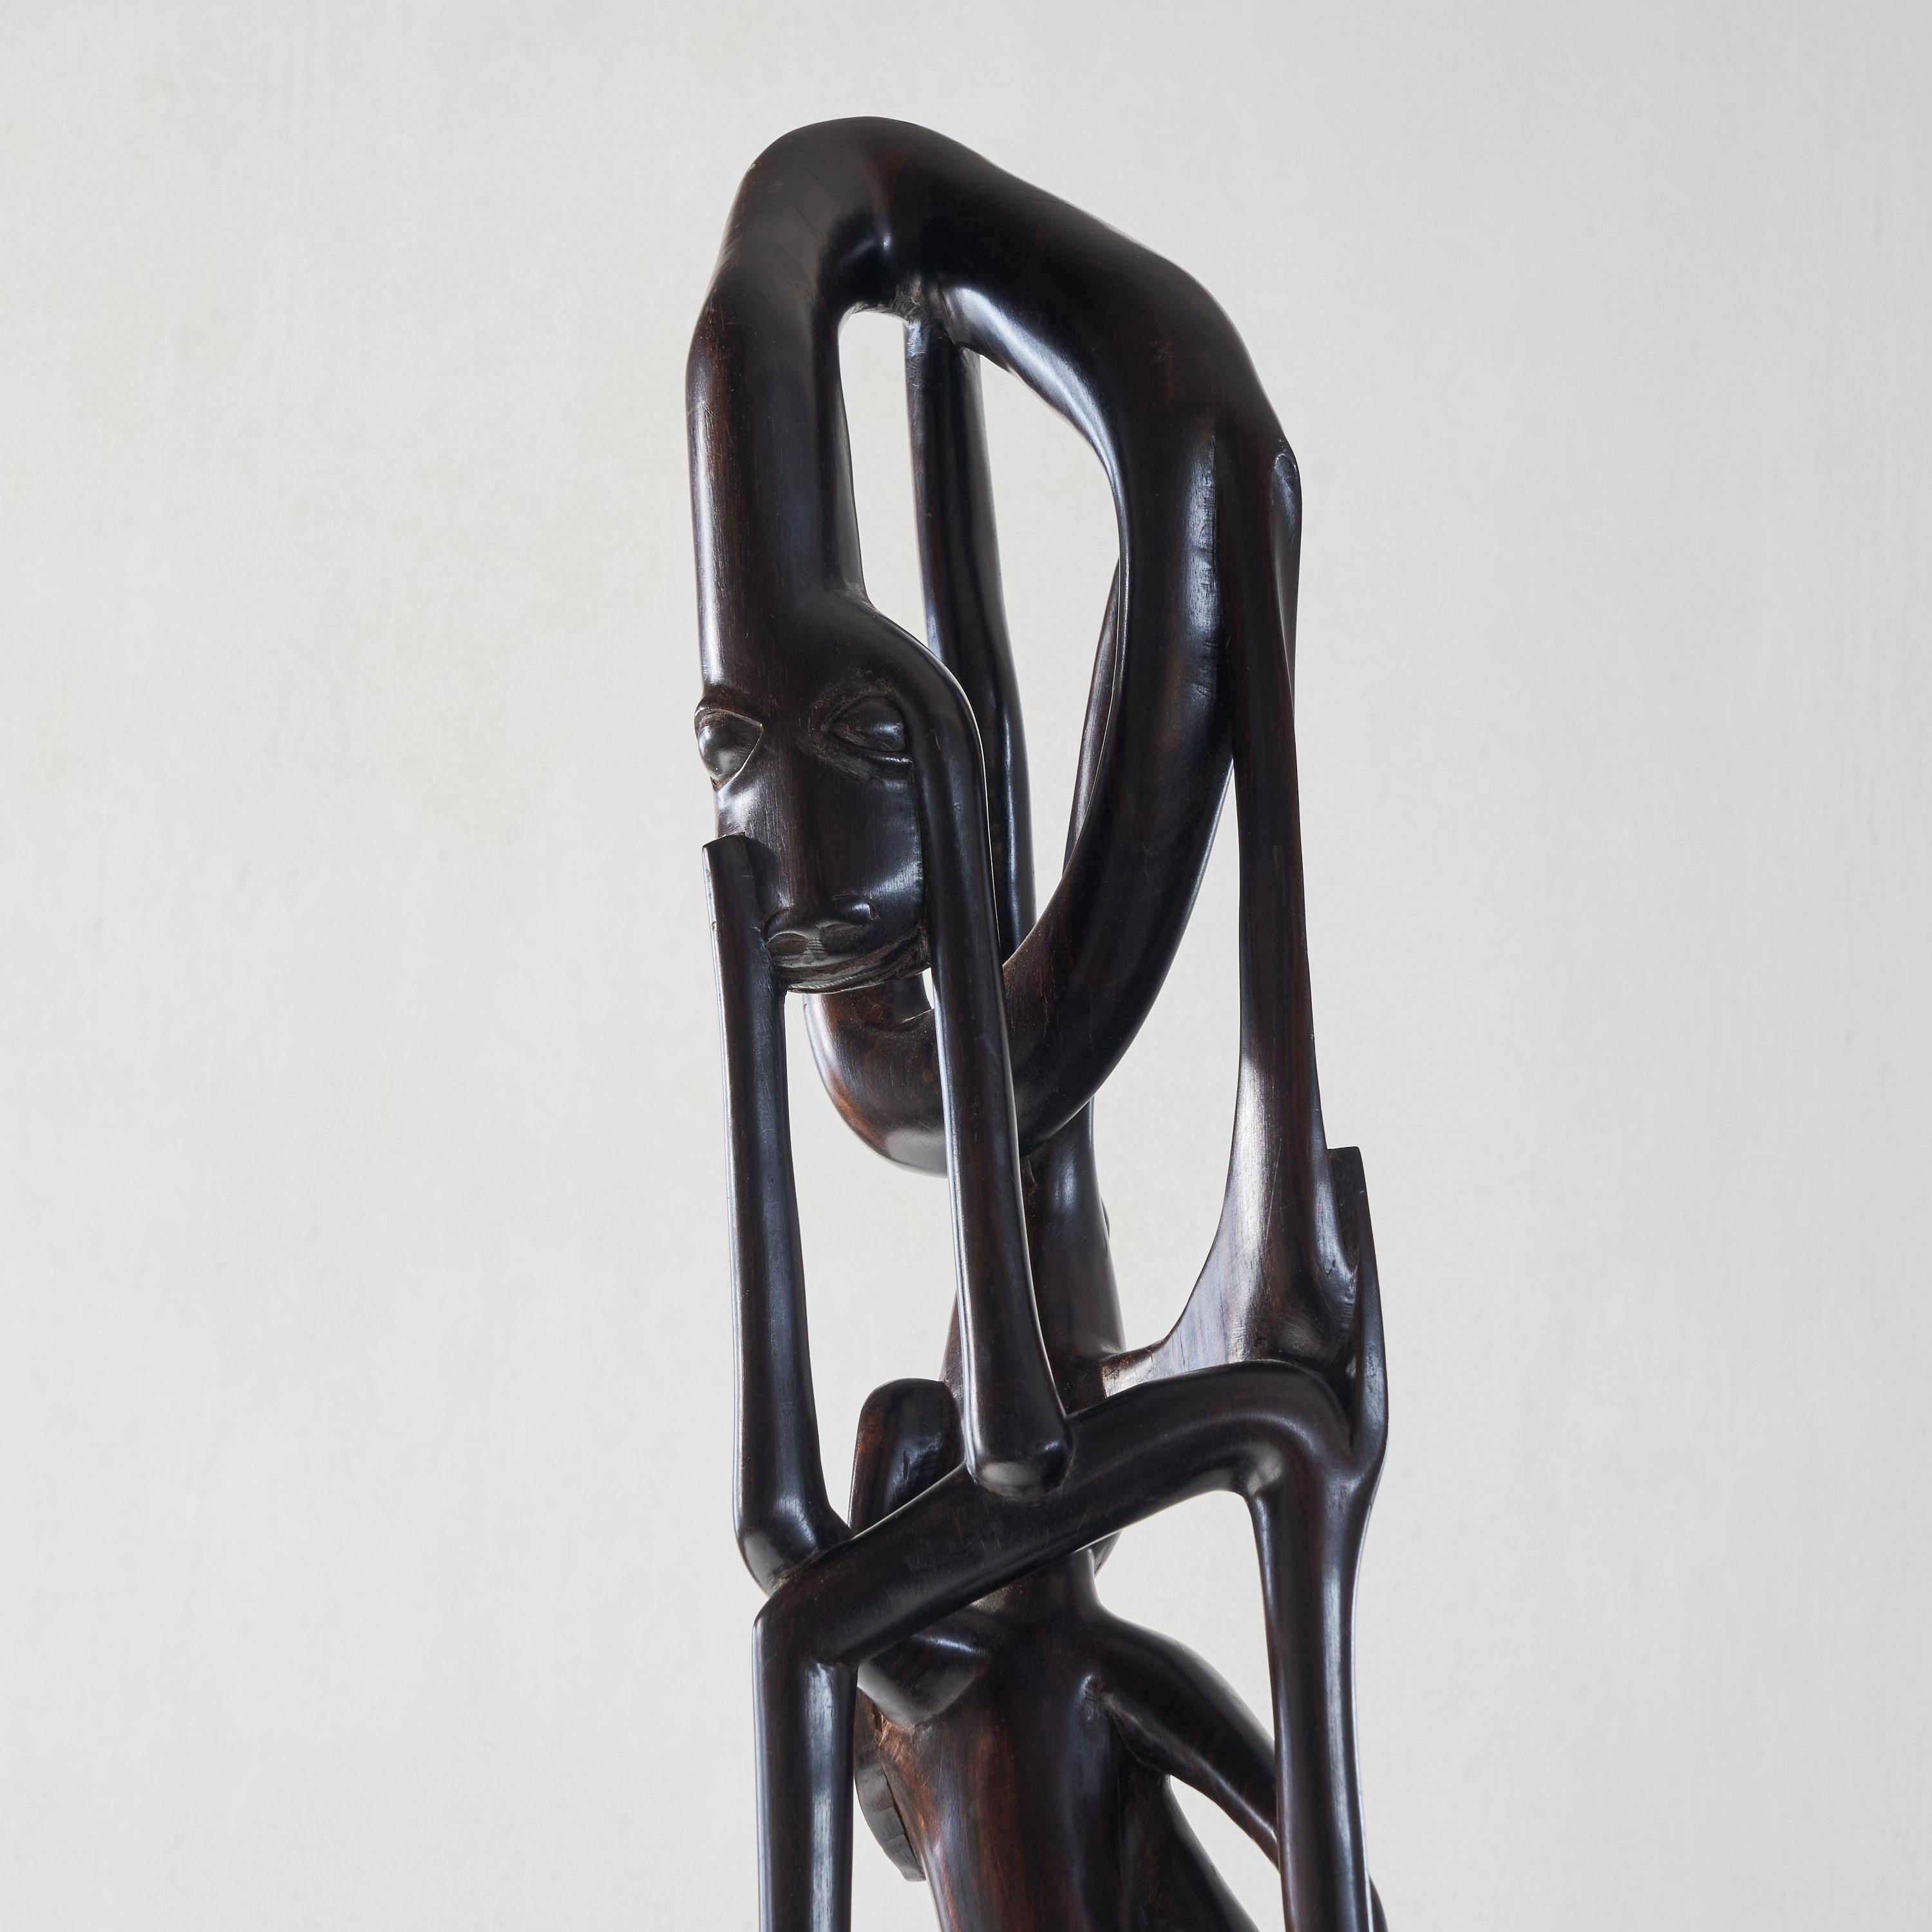 Anthropomorphic Modernist 'Makonde' Sculpture 1950s For Sale 1